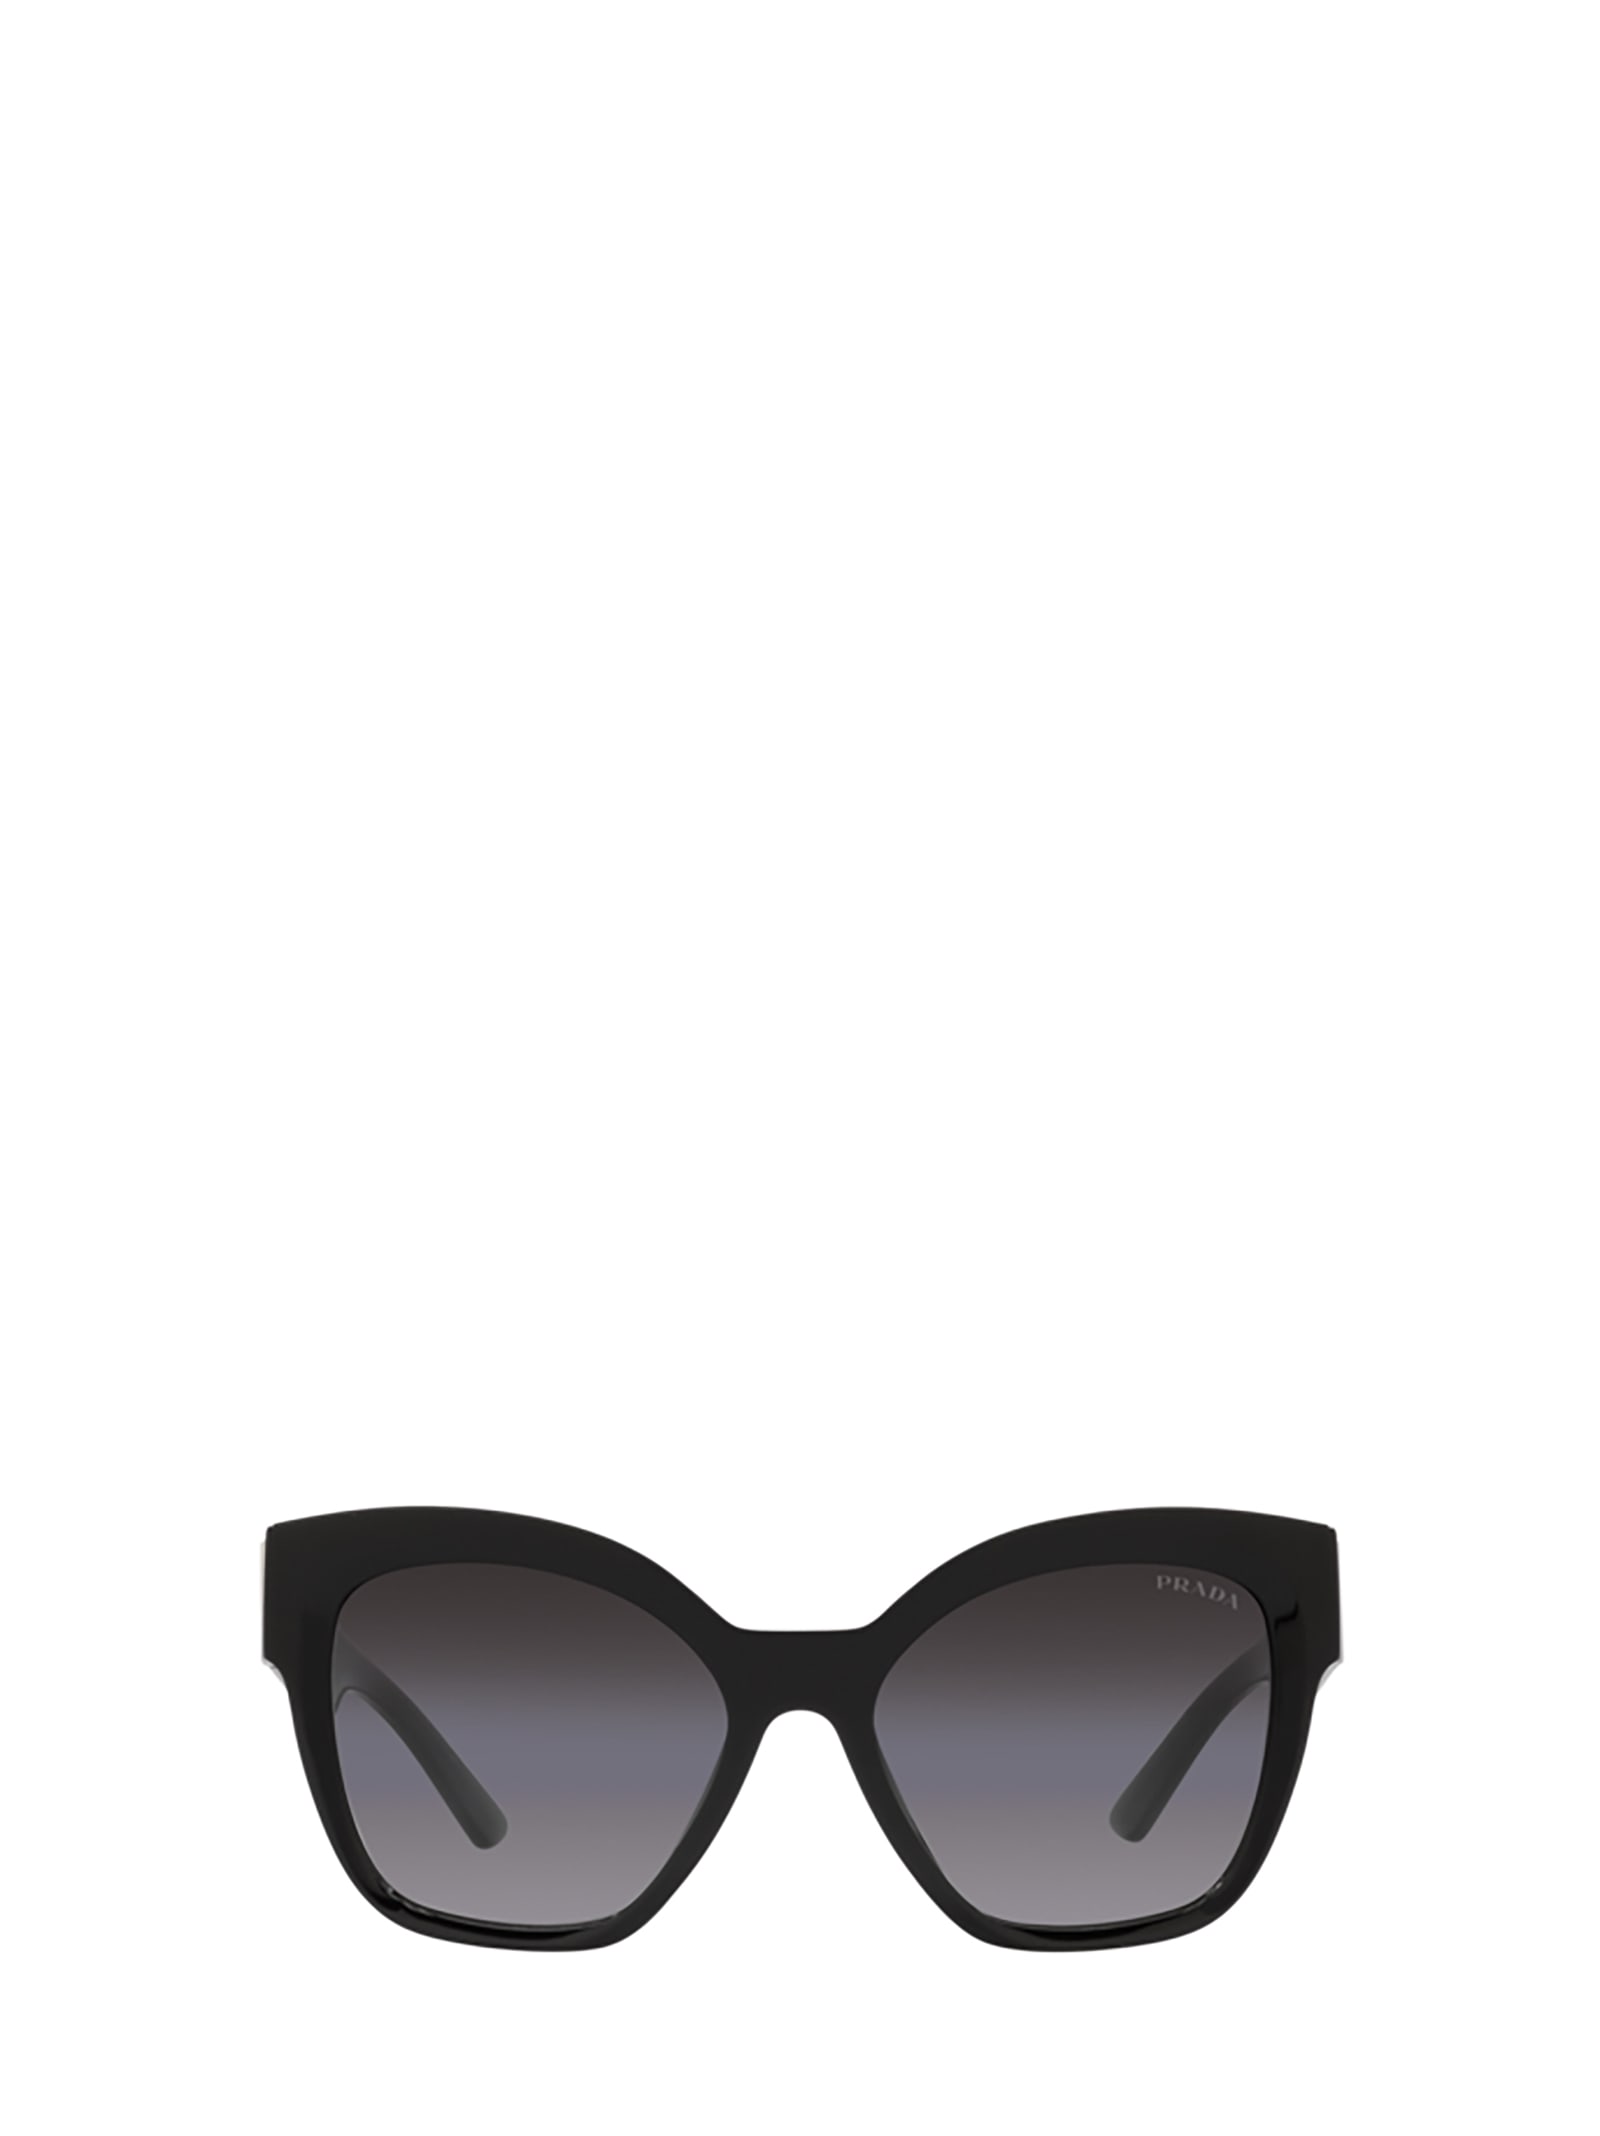 Prada Eyewear Pr 17zs Black Sunglasses